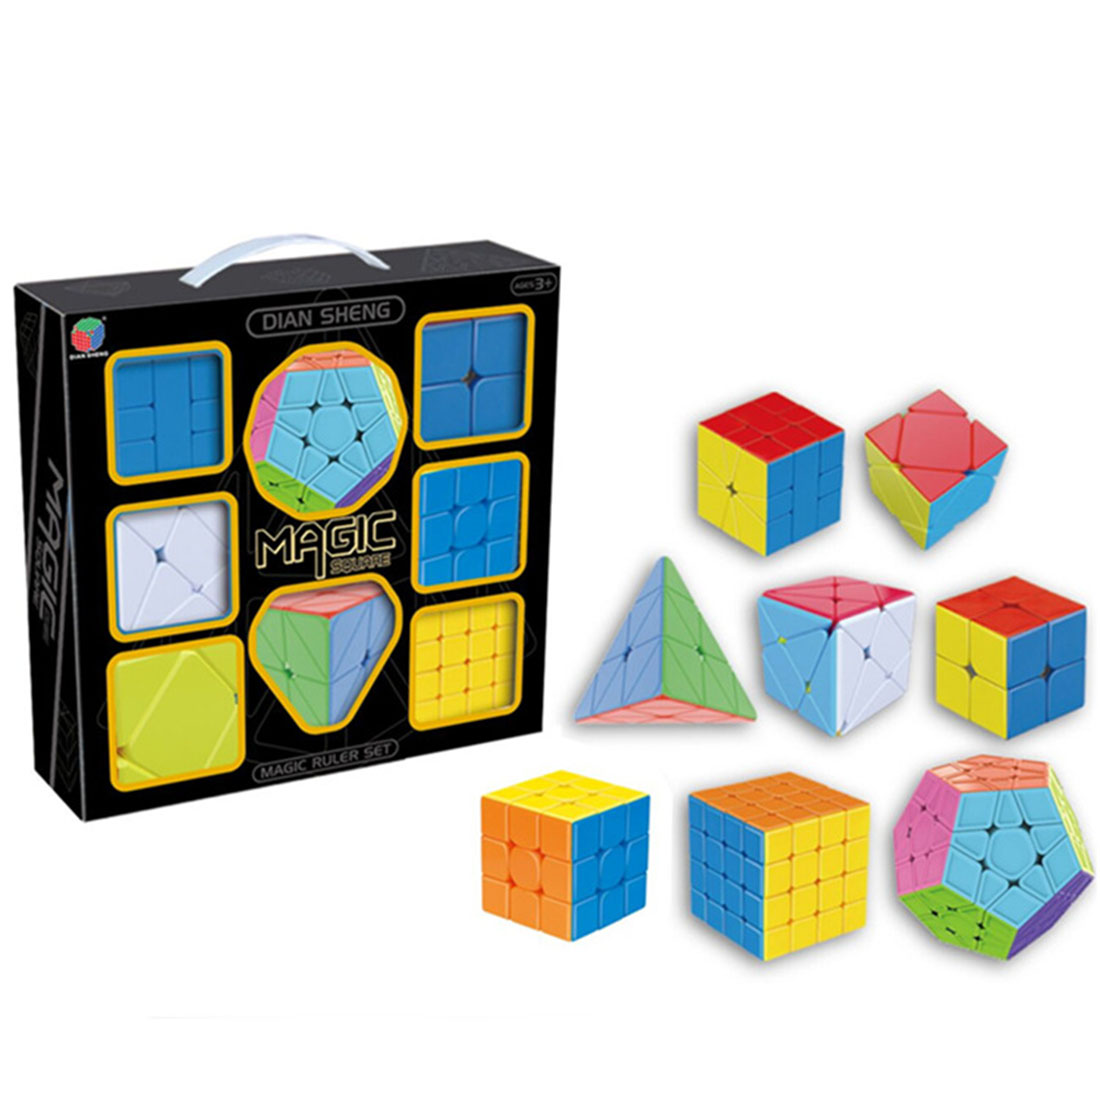 DianSheng 8-in-1 Magic Cube Set (Stickerless)